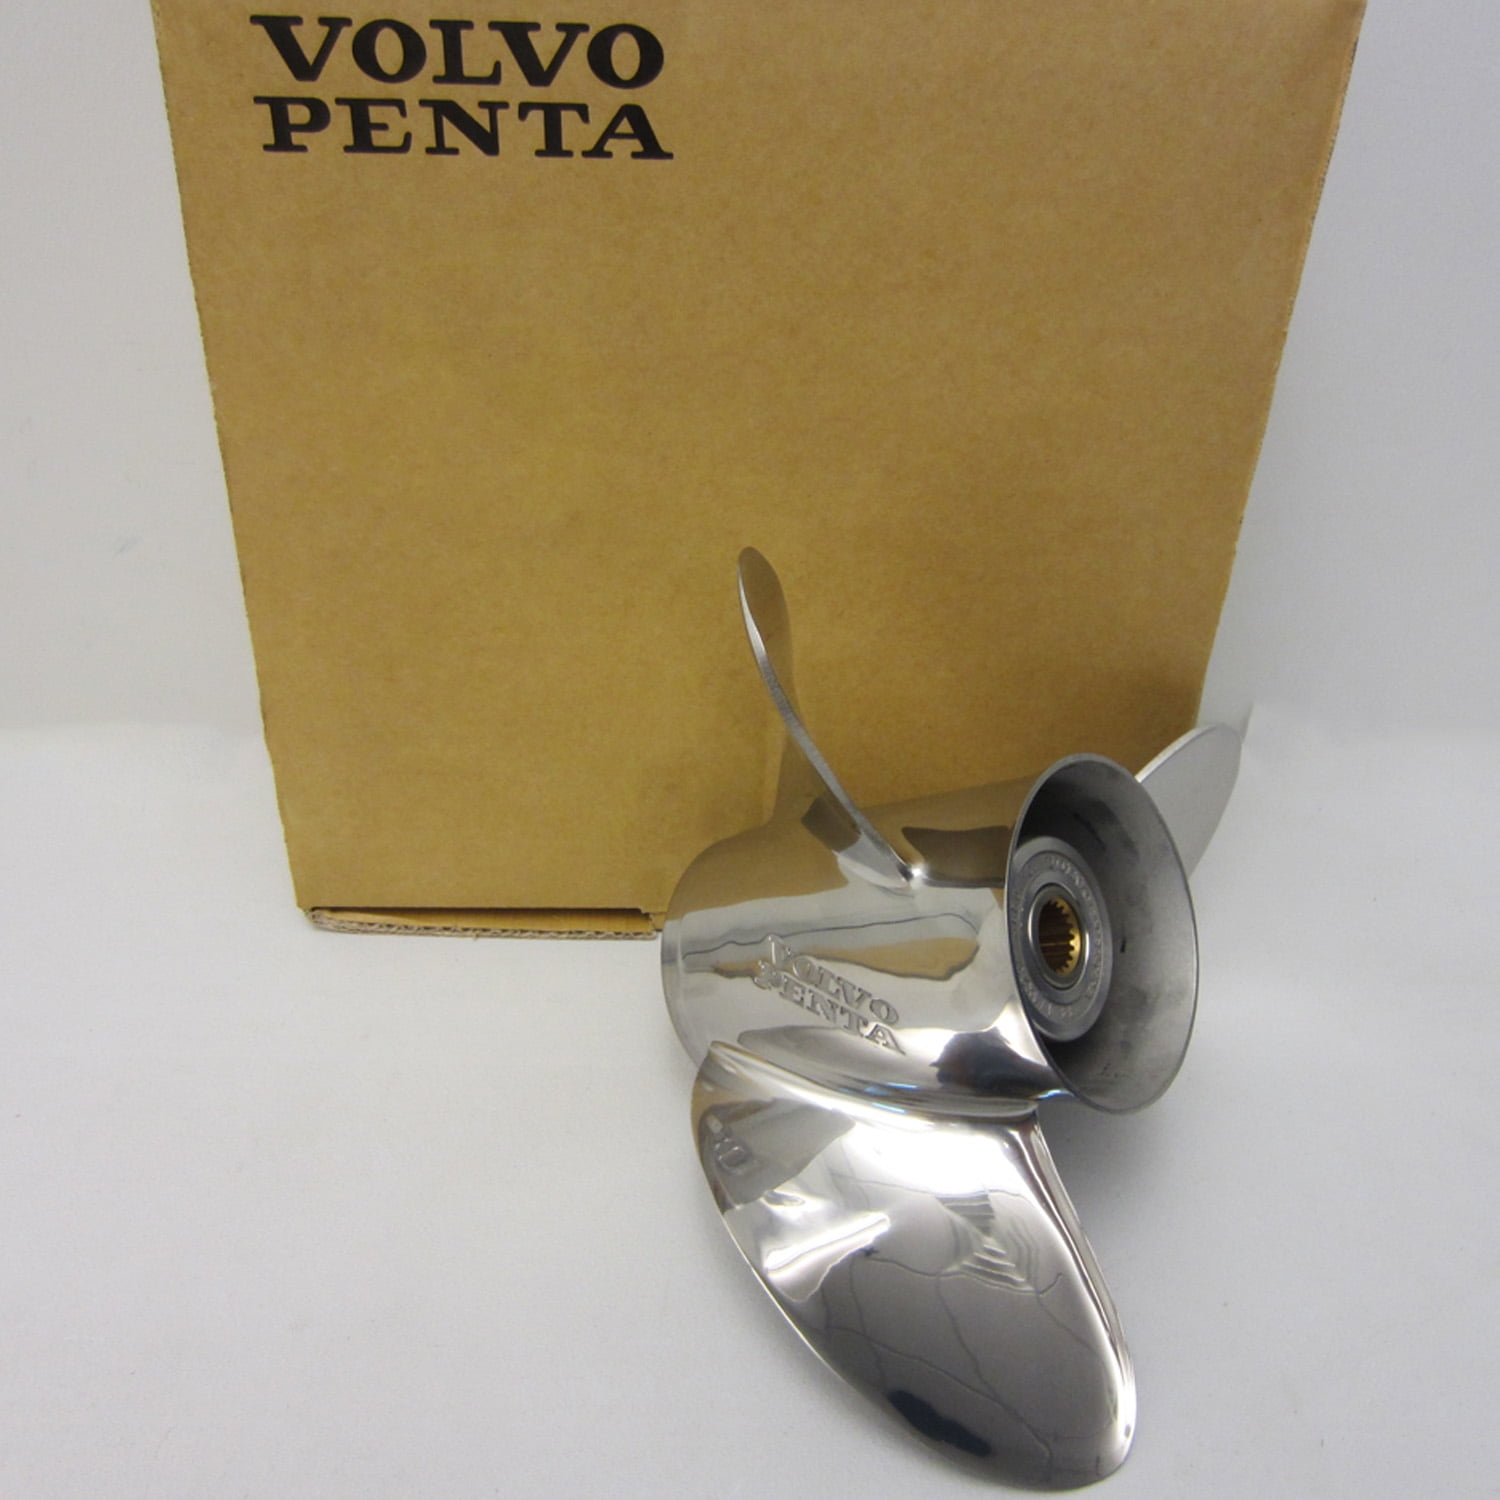 Volvo Penta Stainless Steel Props